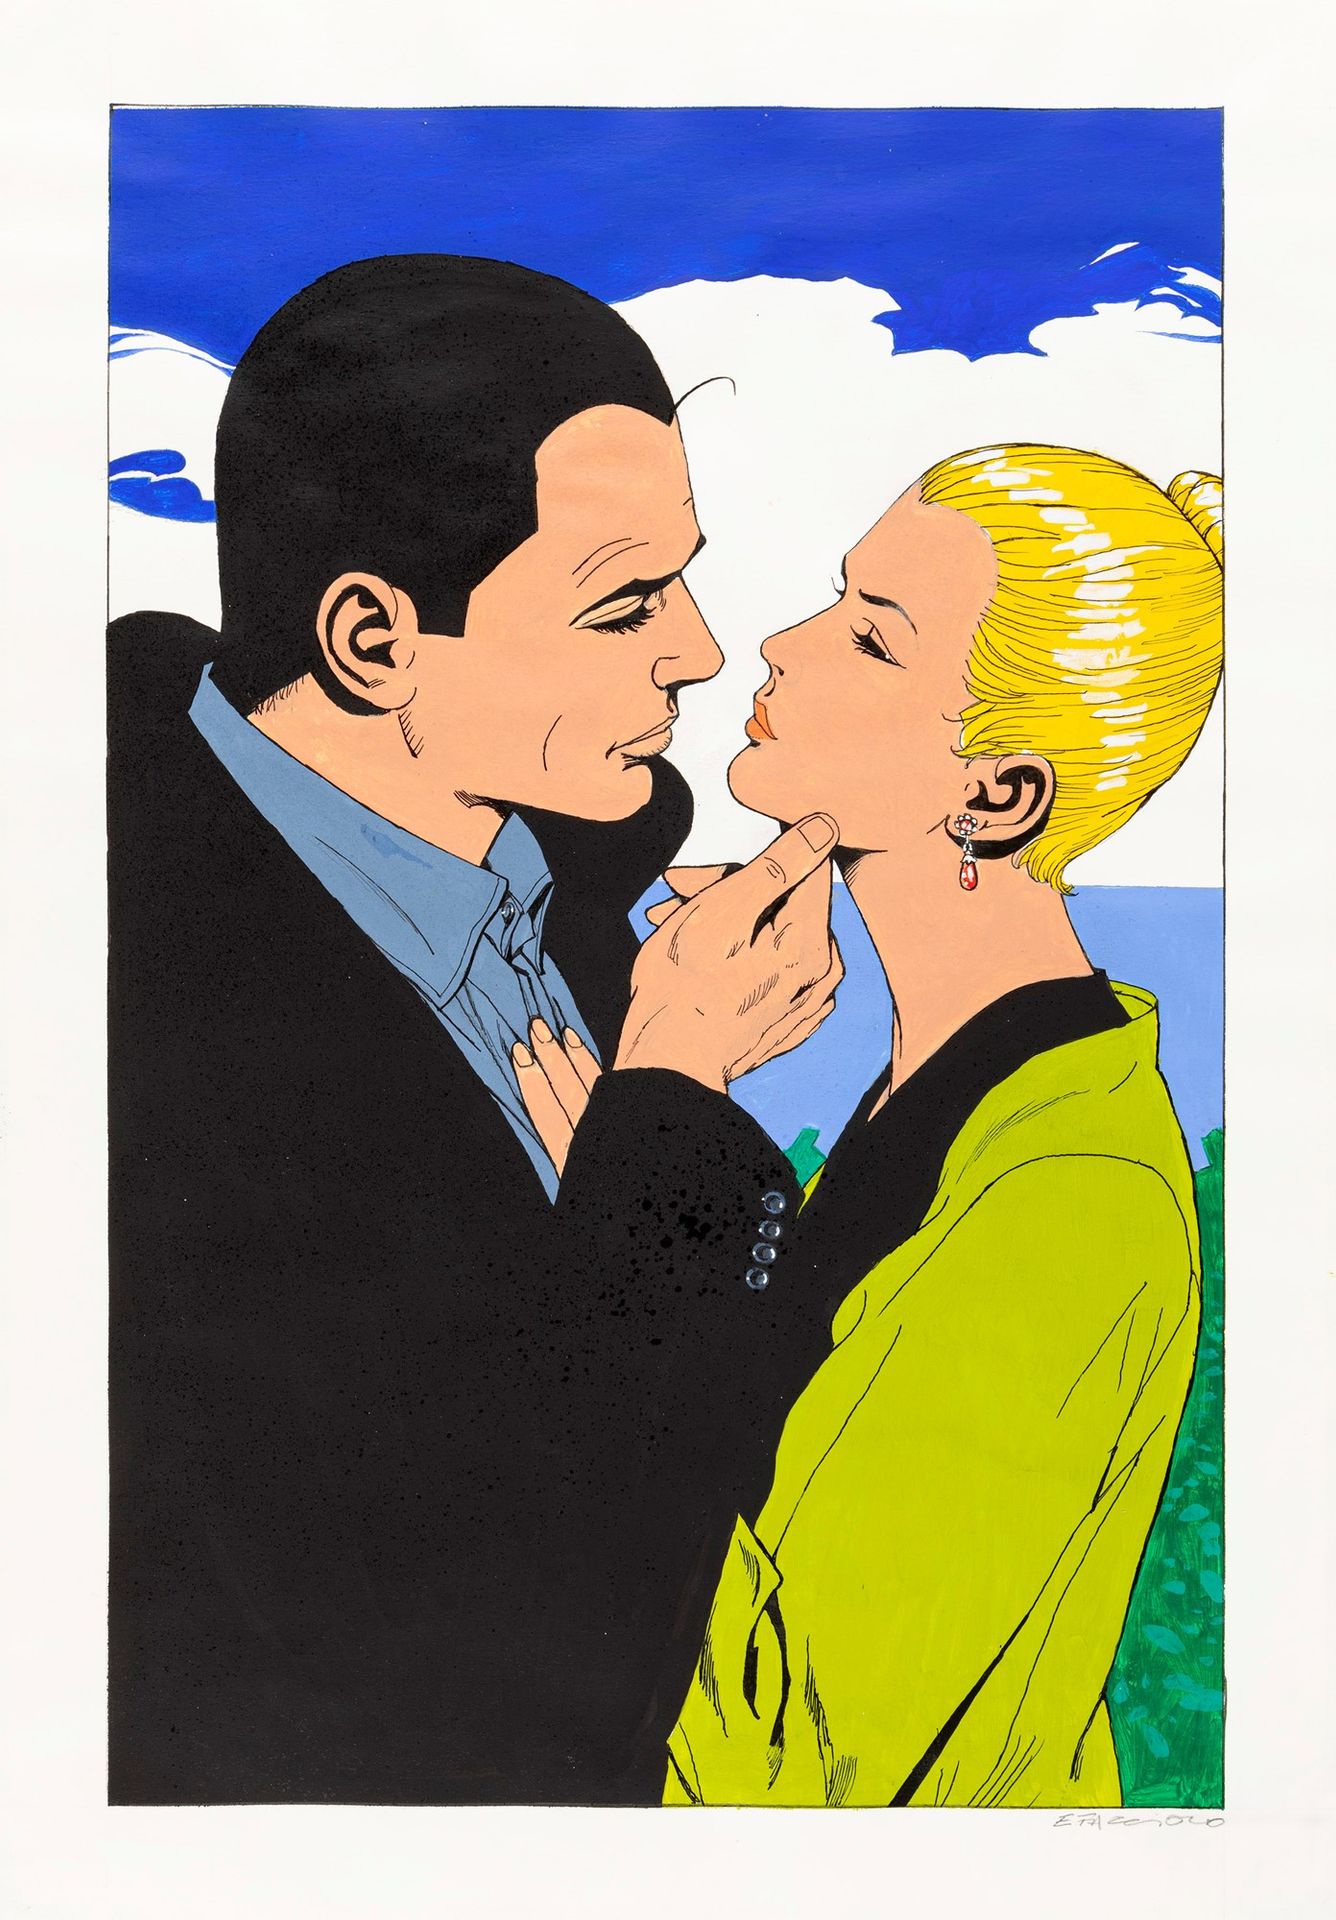 ENZO FACCIOLO Diabolik et Eva, 2012

tempera sur carton fin
34,5 x 50 cm
Illustr&hellip;